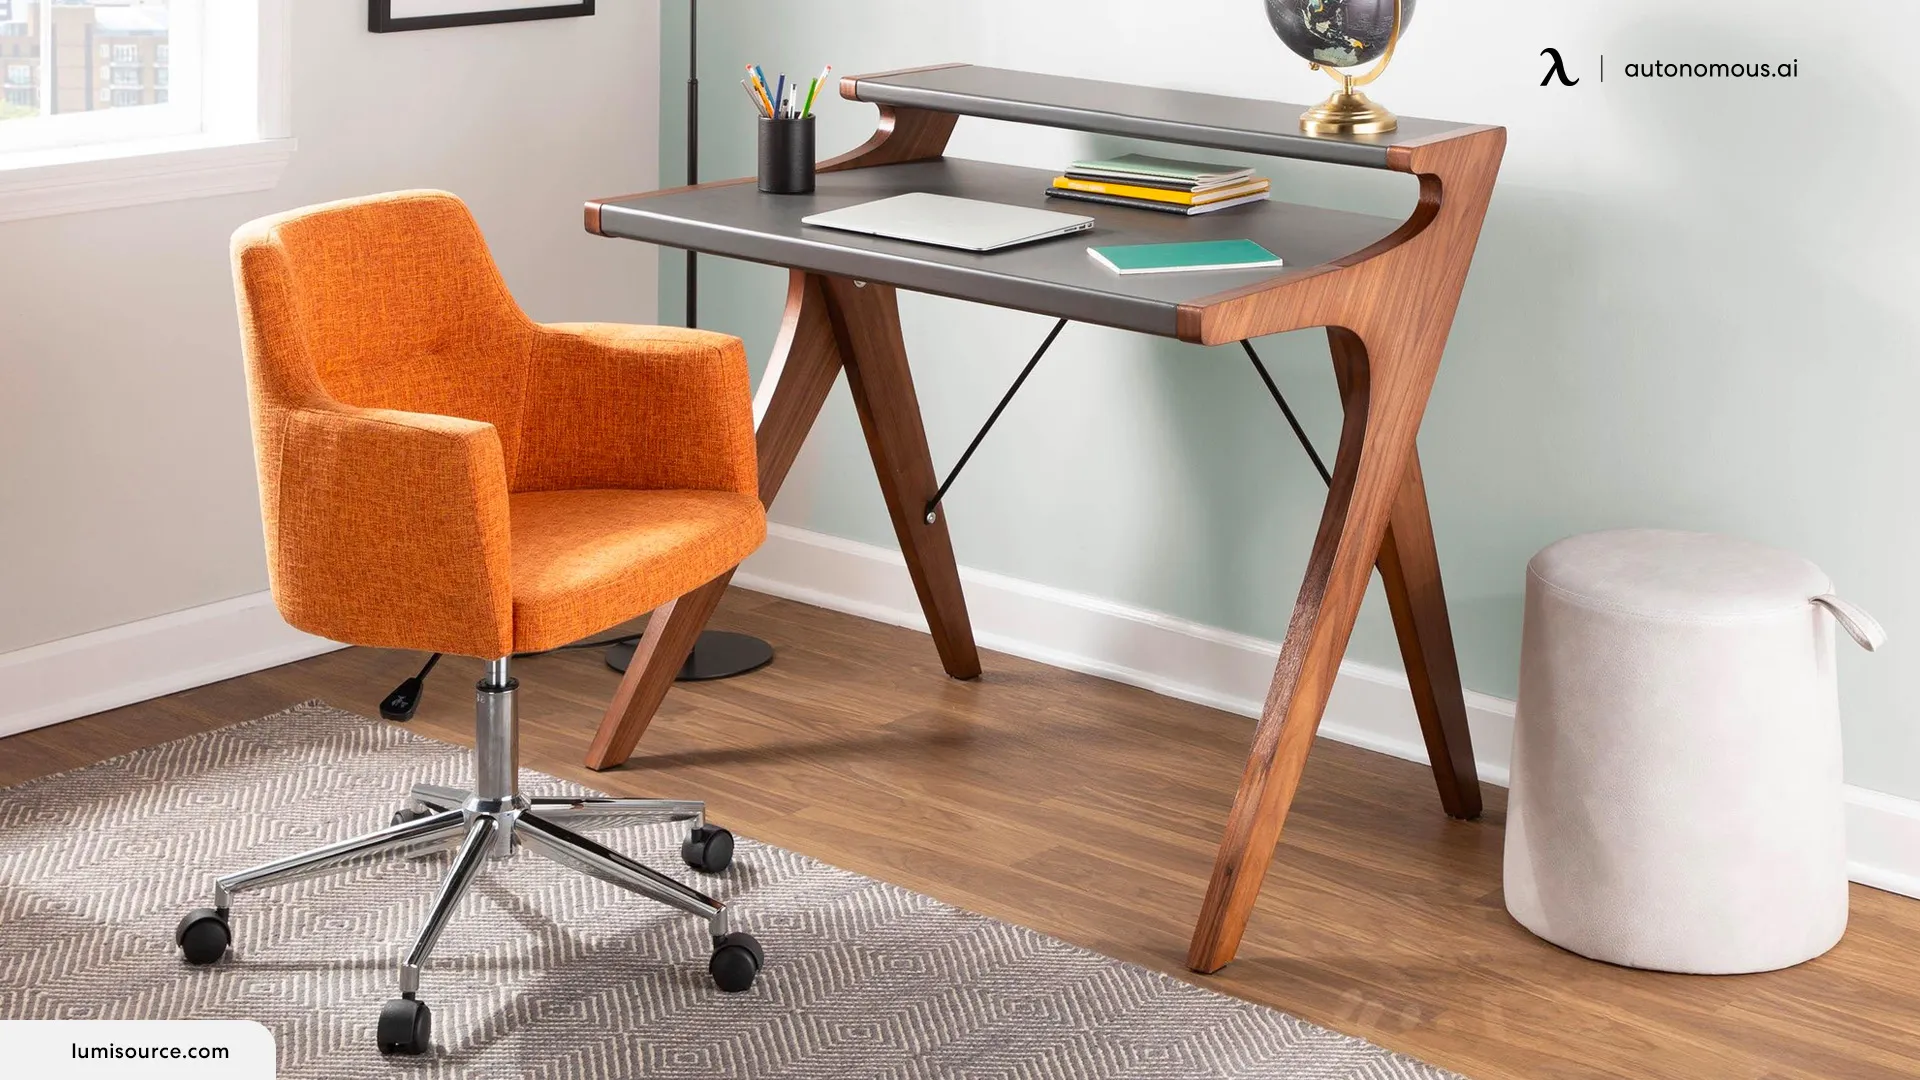 Why Choose an Orange Office Chair?